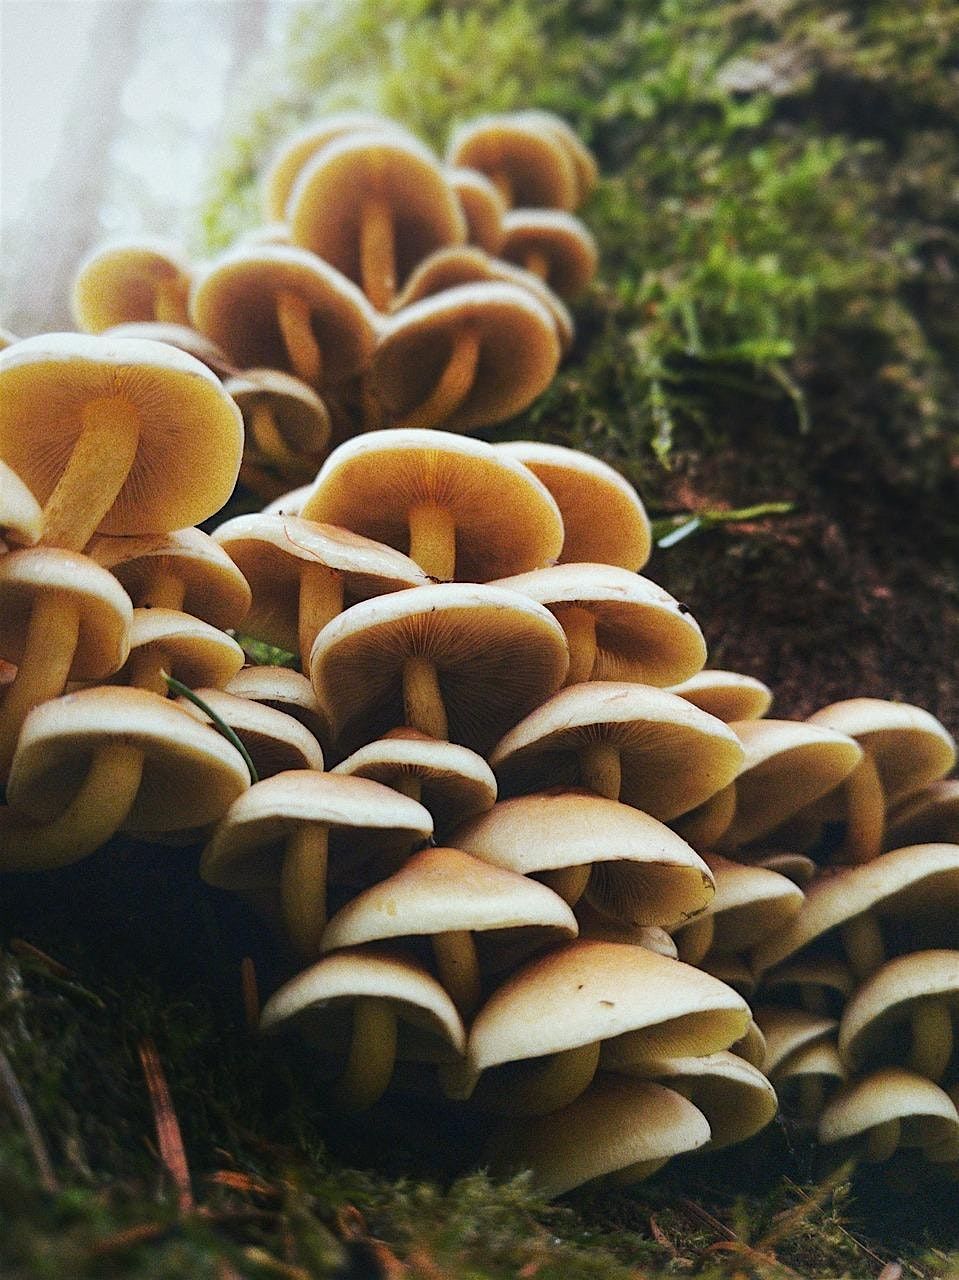 A Taste of Good Medicine: A Culinary & Art Exploration of Mushrooms